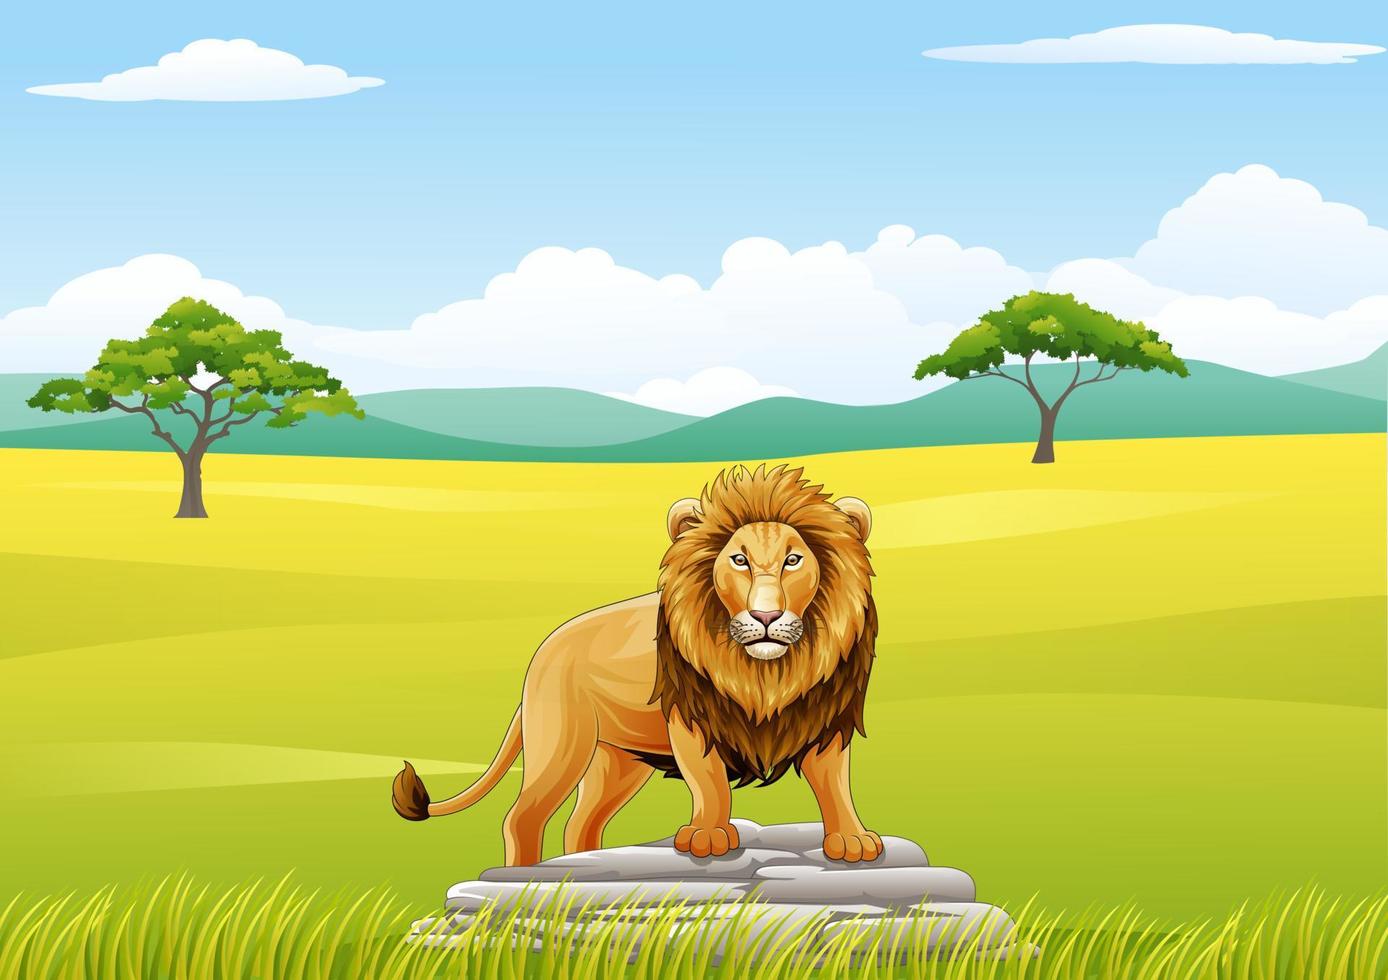 Cartoon lion mascot vector